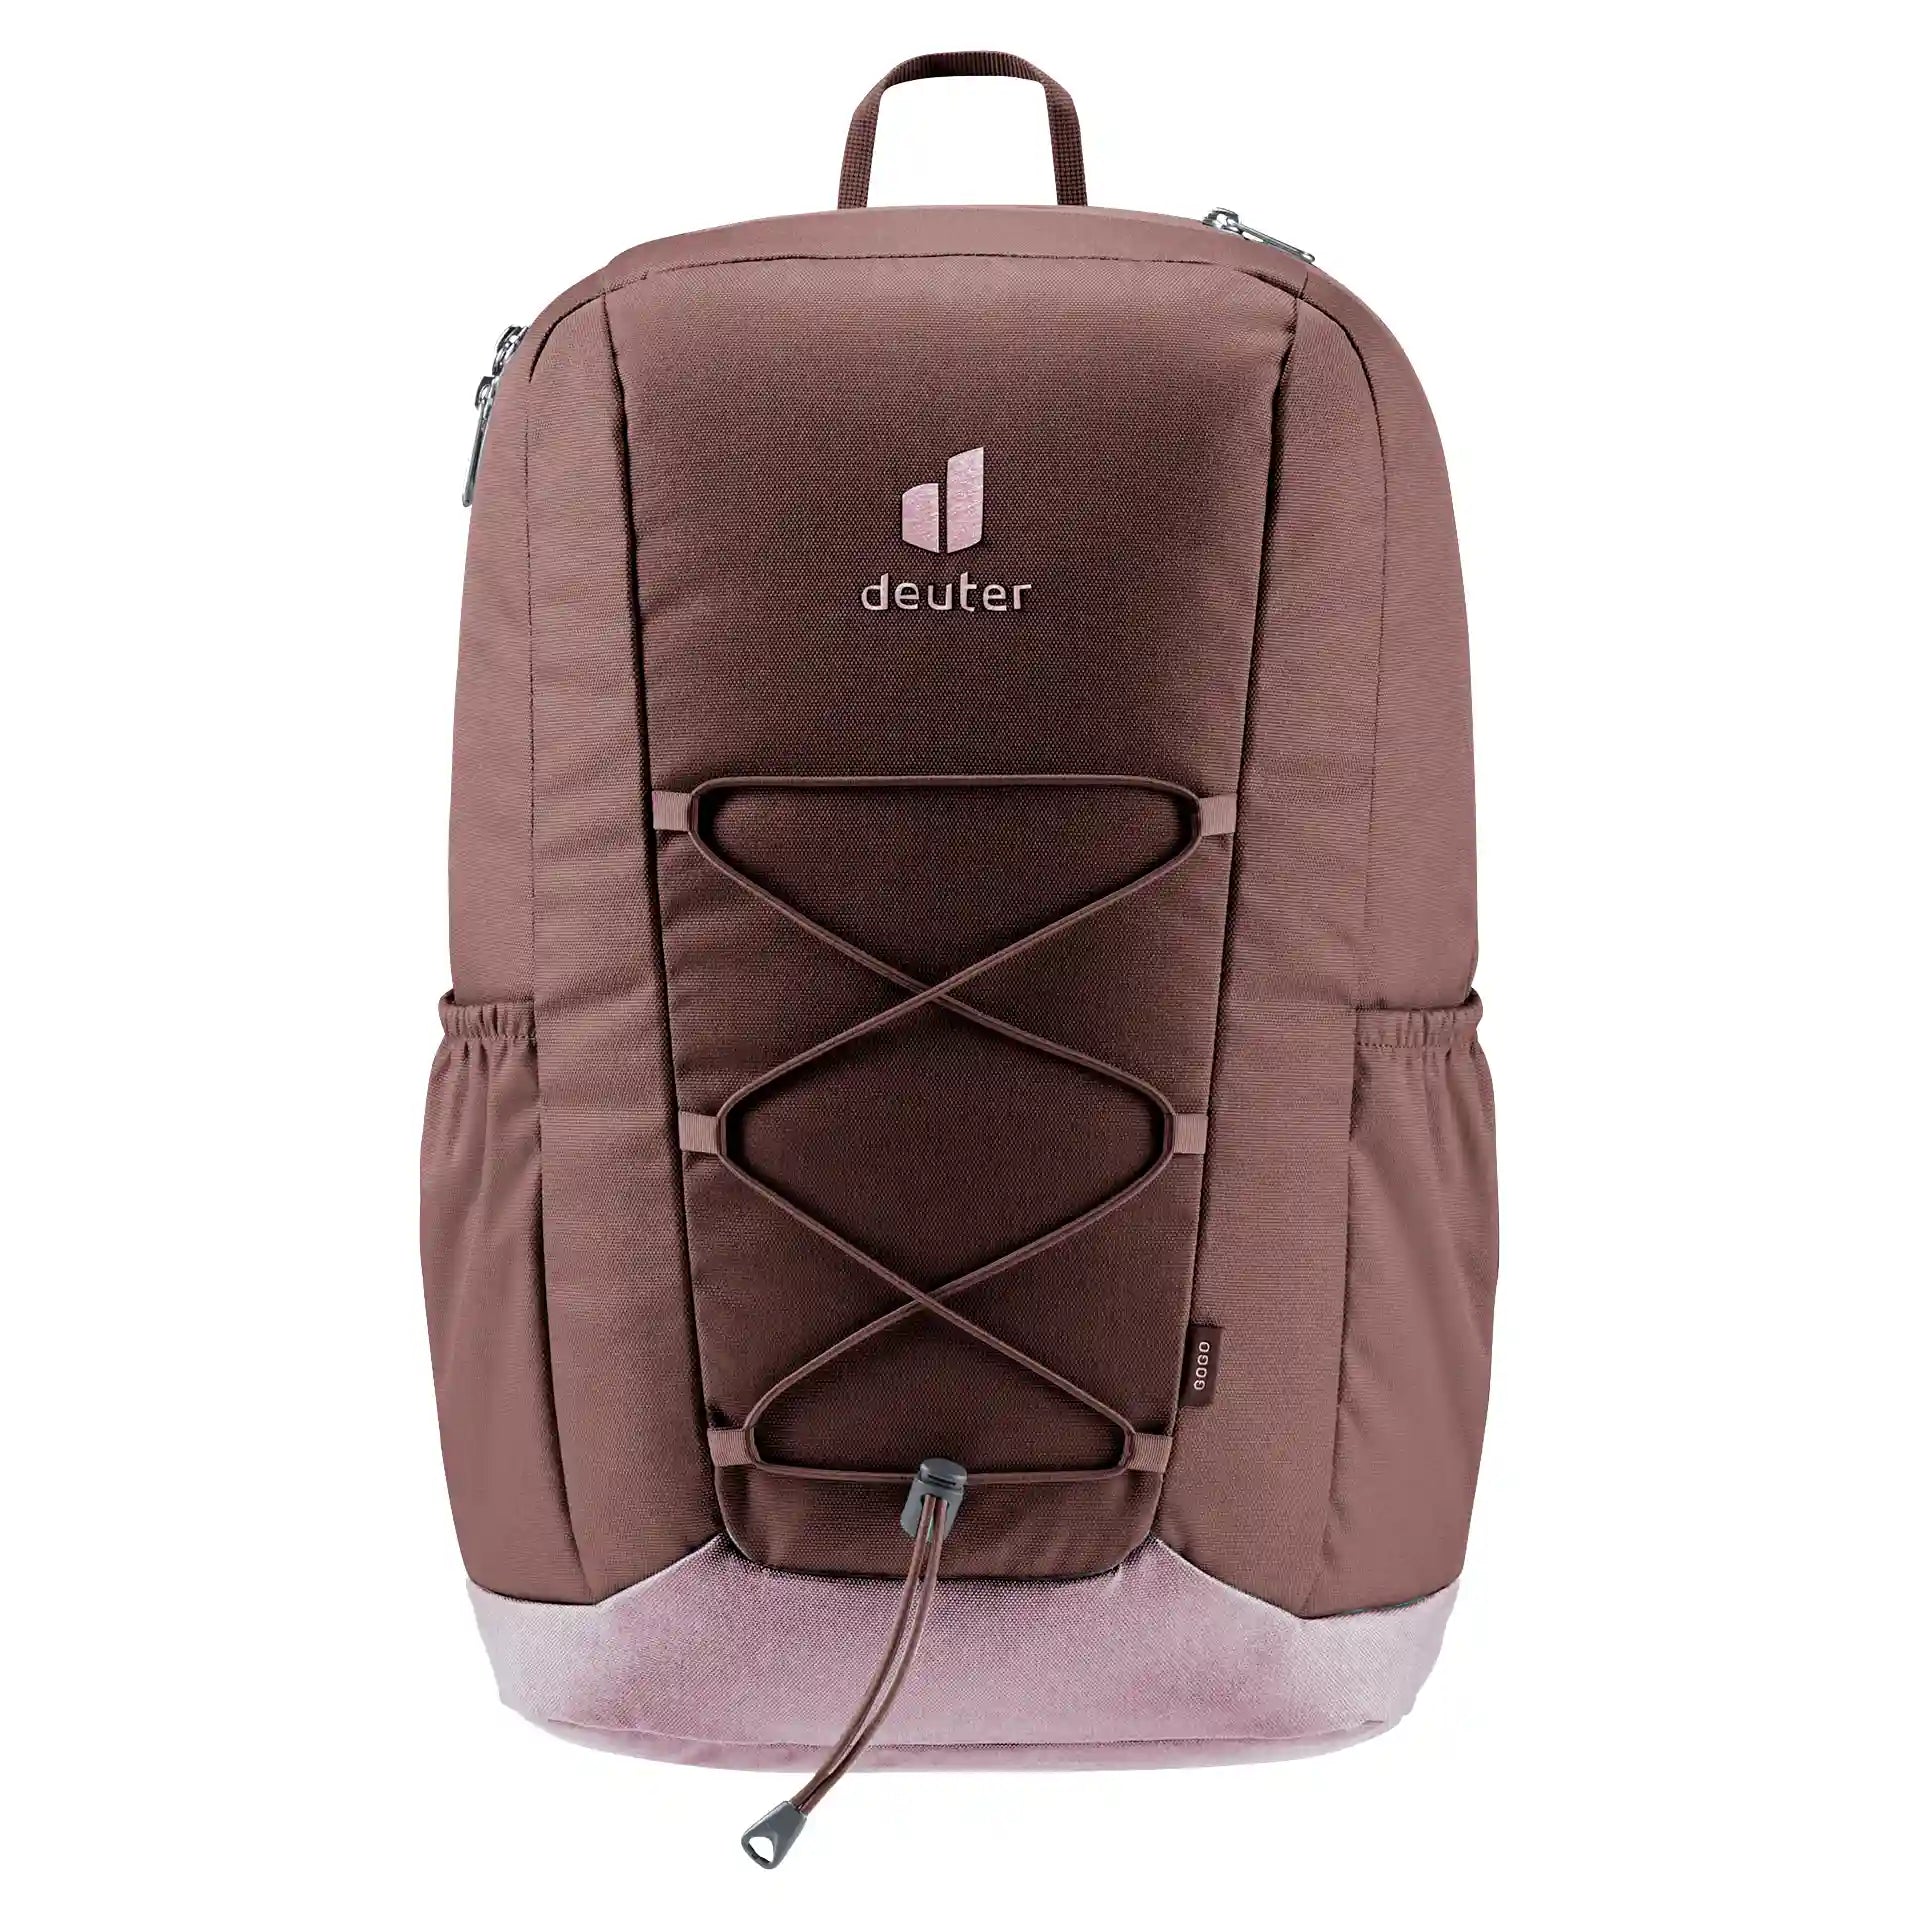 Deuter Gogo Lifestyle Backpack 46 cm - Atlantic Ink